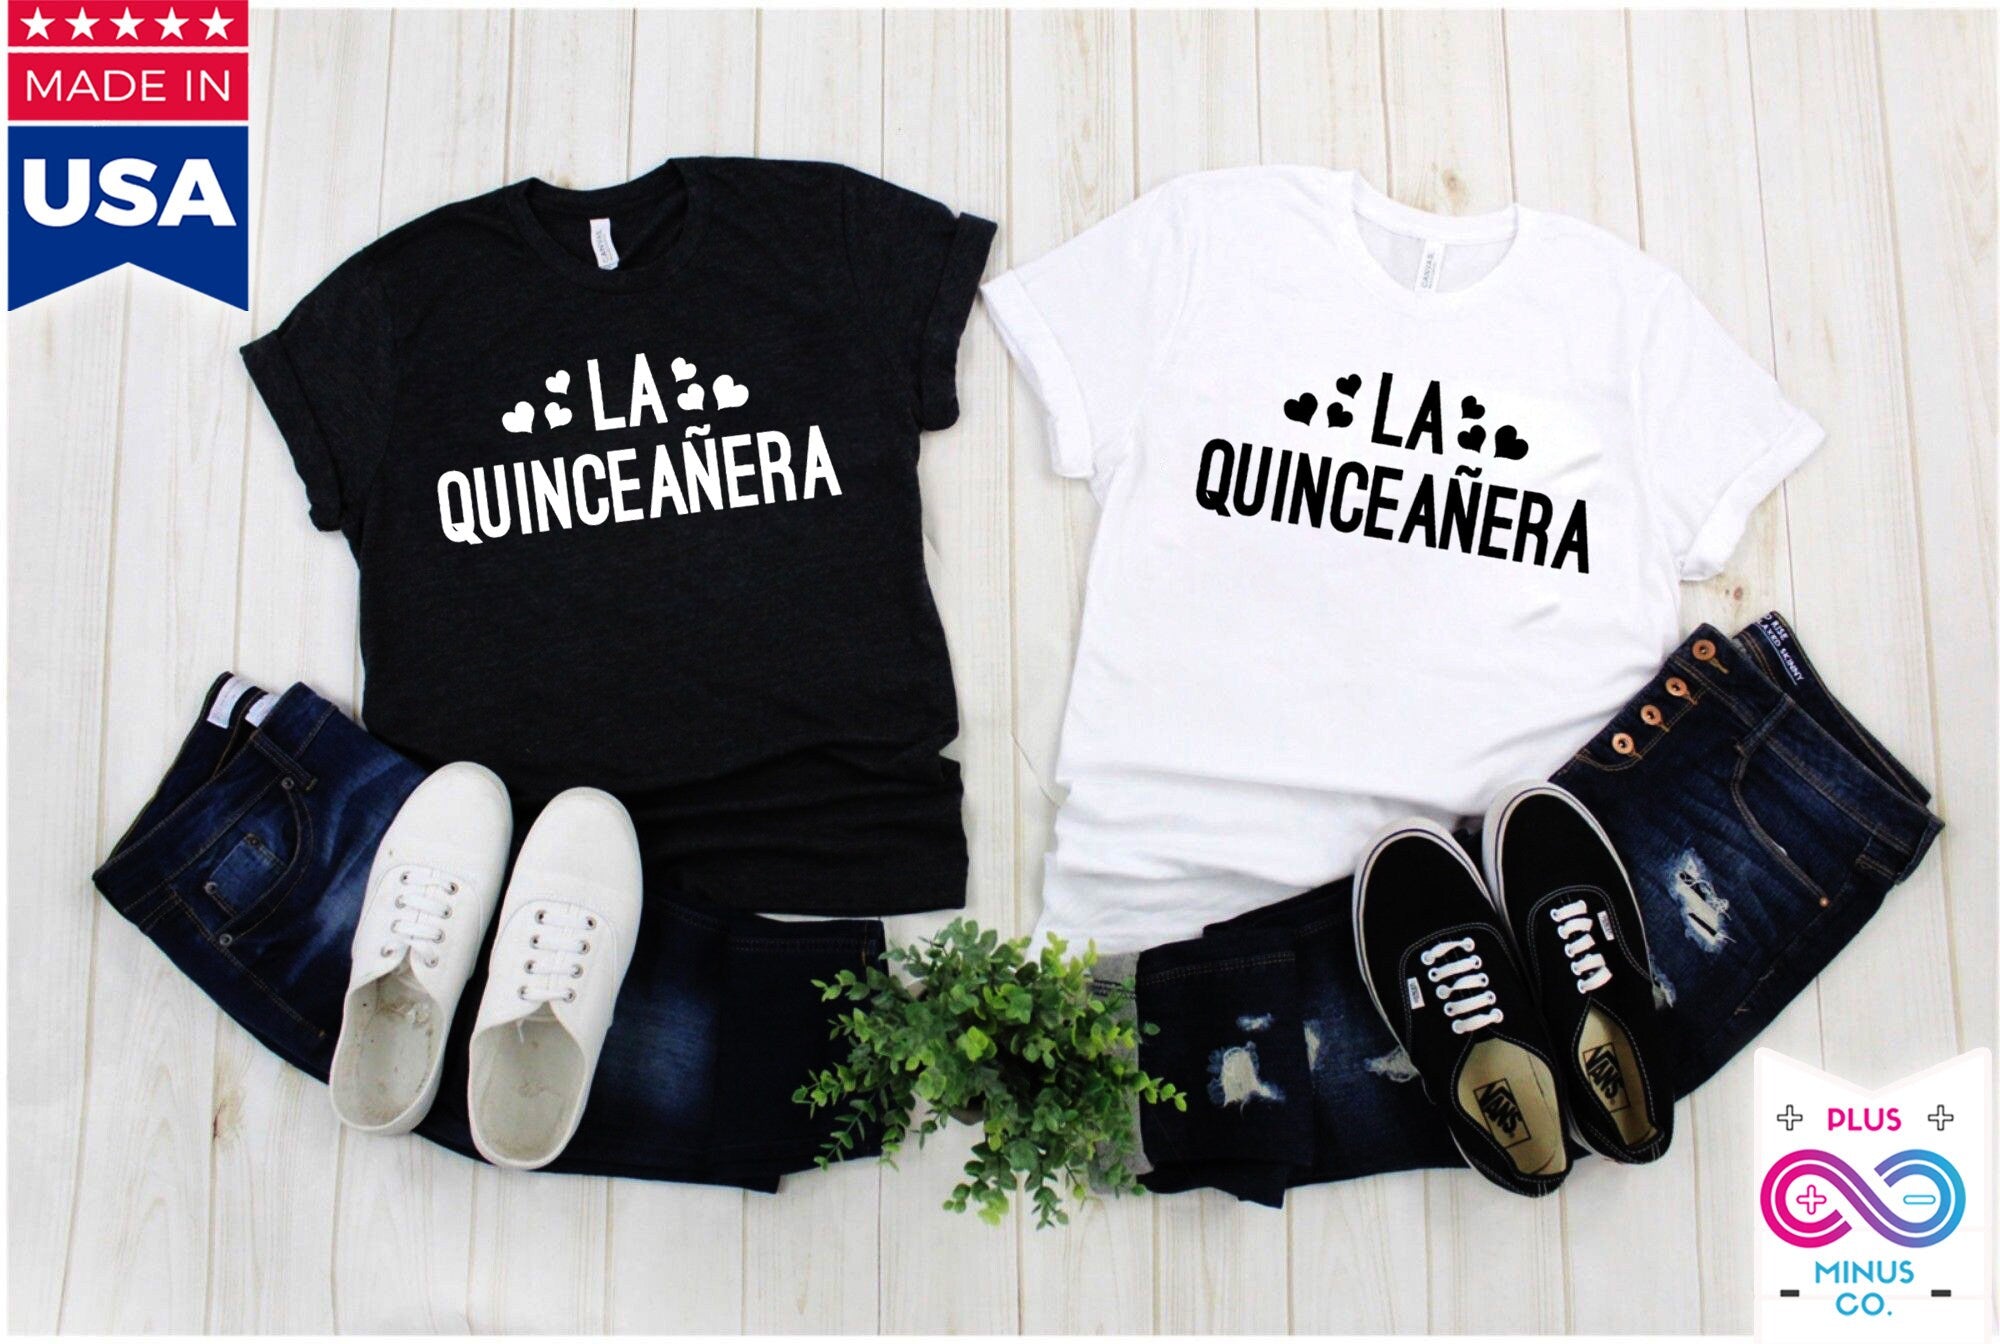 La Quinceañera 라티나 스페인어 티셔츠,멕시코 셔츠 Quinceanera 선물 리허설 파티 복장, Quince Anos 파티 모과 셔츠 - plusminusco.com